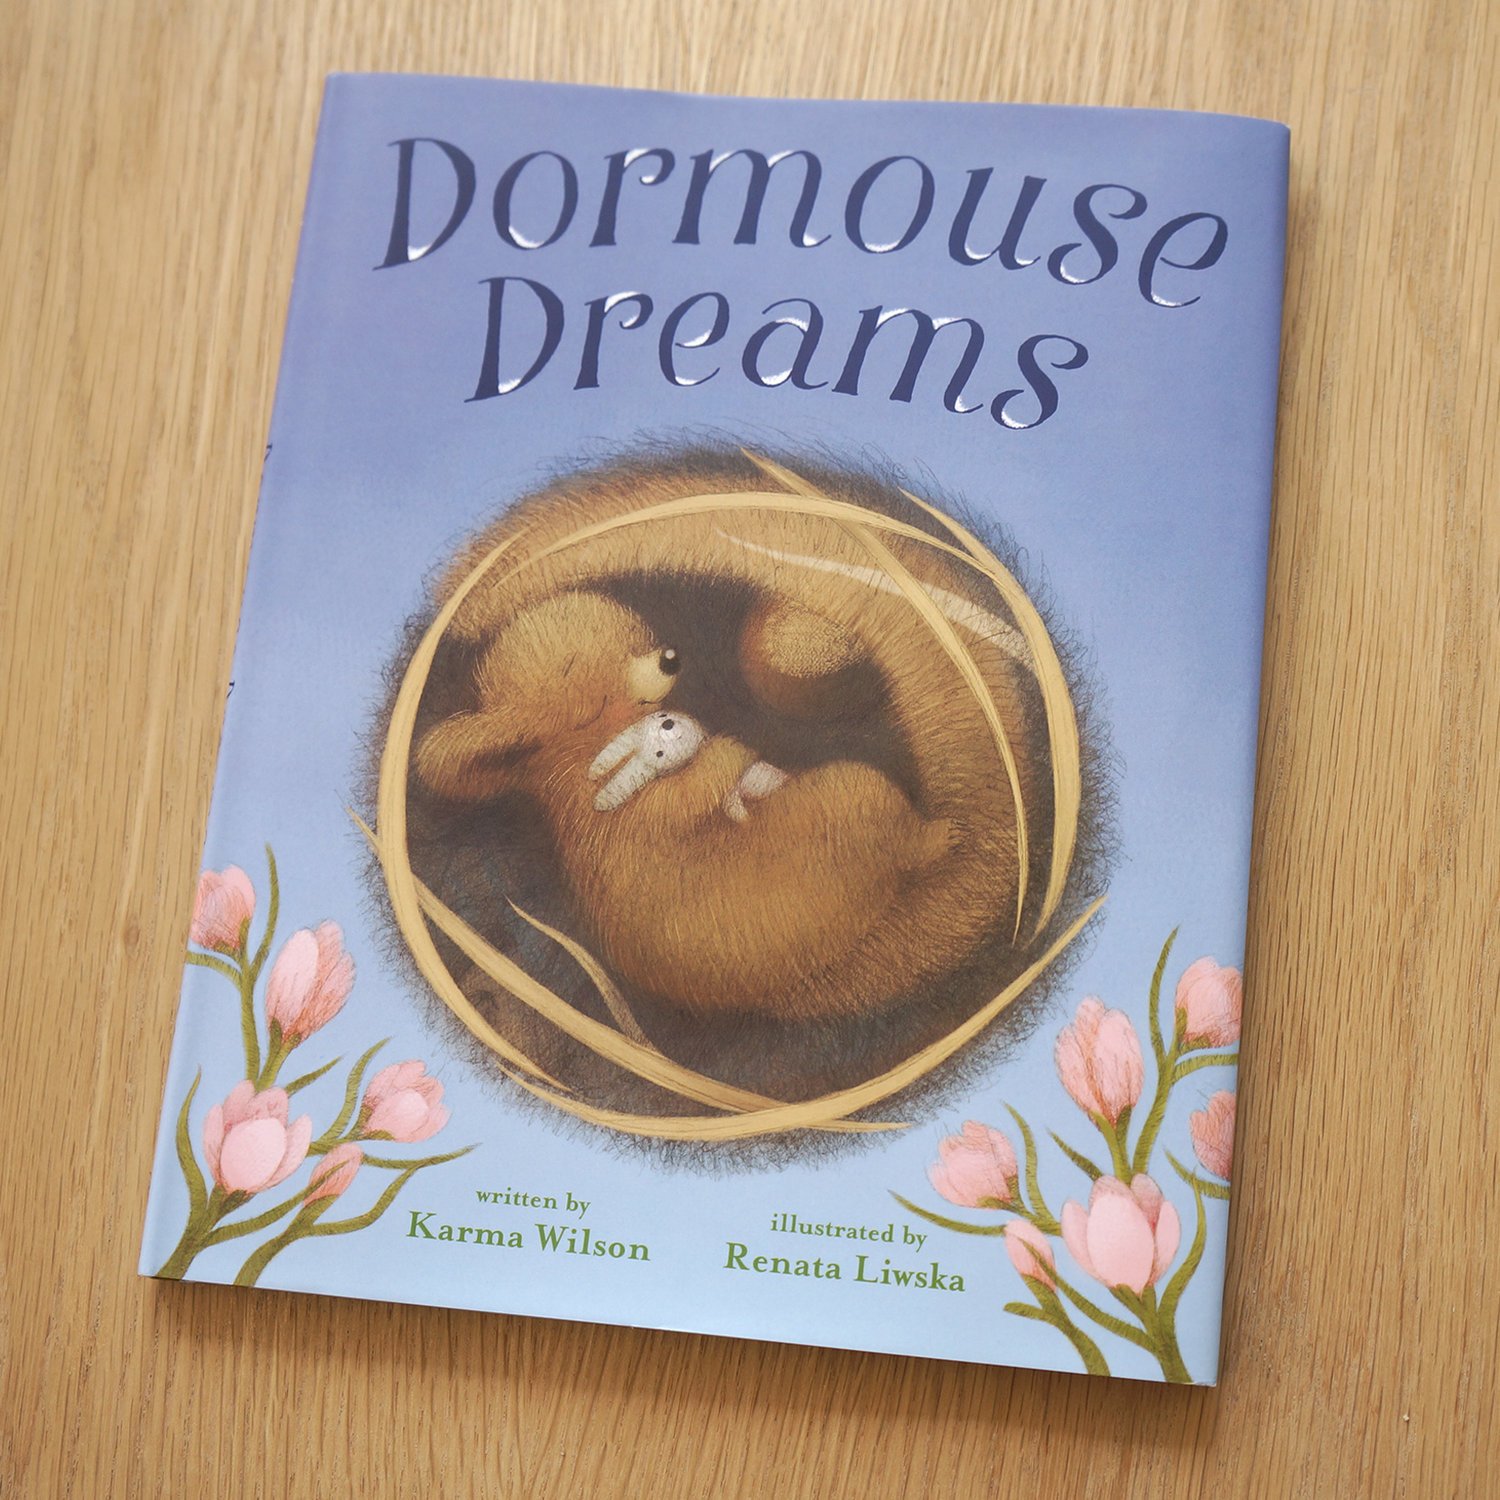 Dormouse Dreams by Karma Wilson